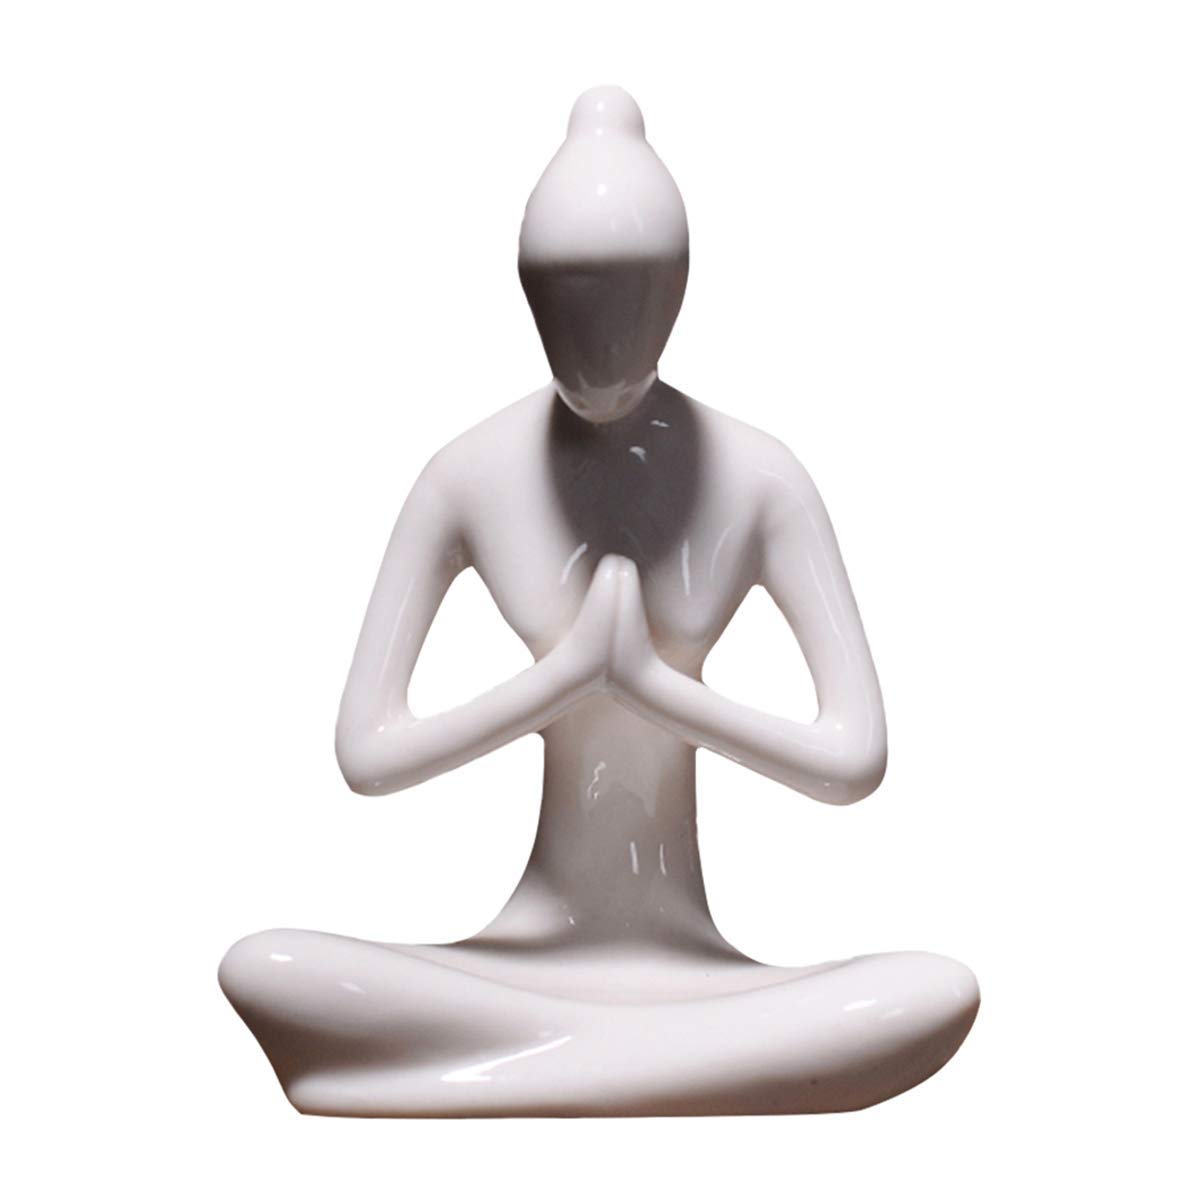 Cozylkx Ceramic Yoga Poses Lady Statues, Collectible Figurine Sculpture Decoration Ornament for Home, Yoga Studio, Meditation Room Art Decor